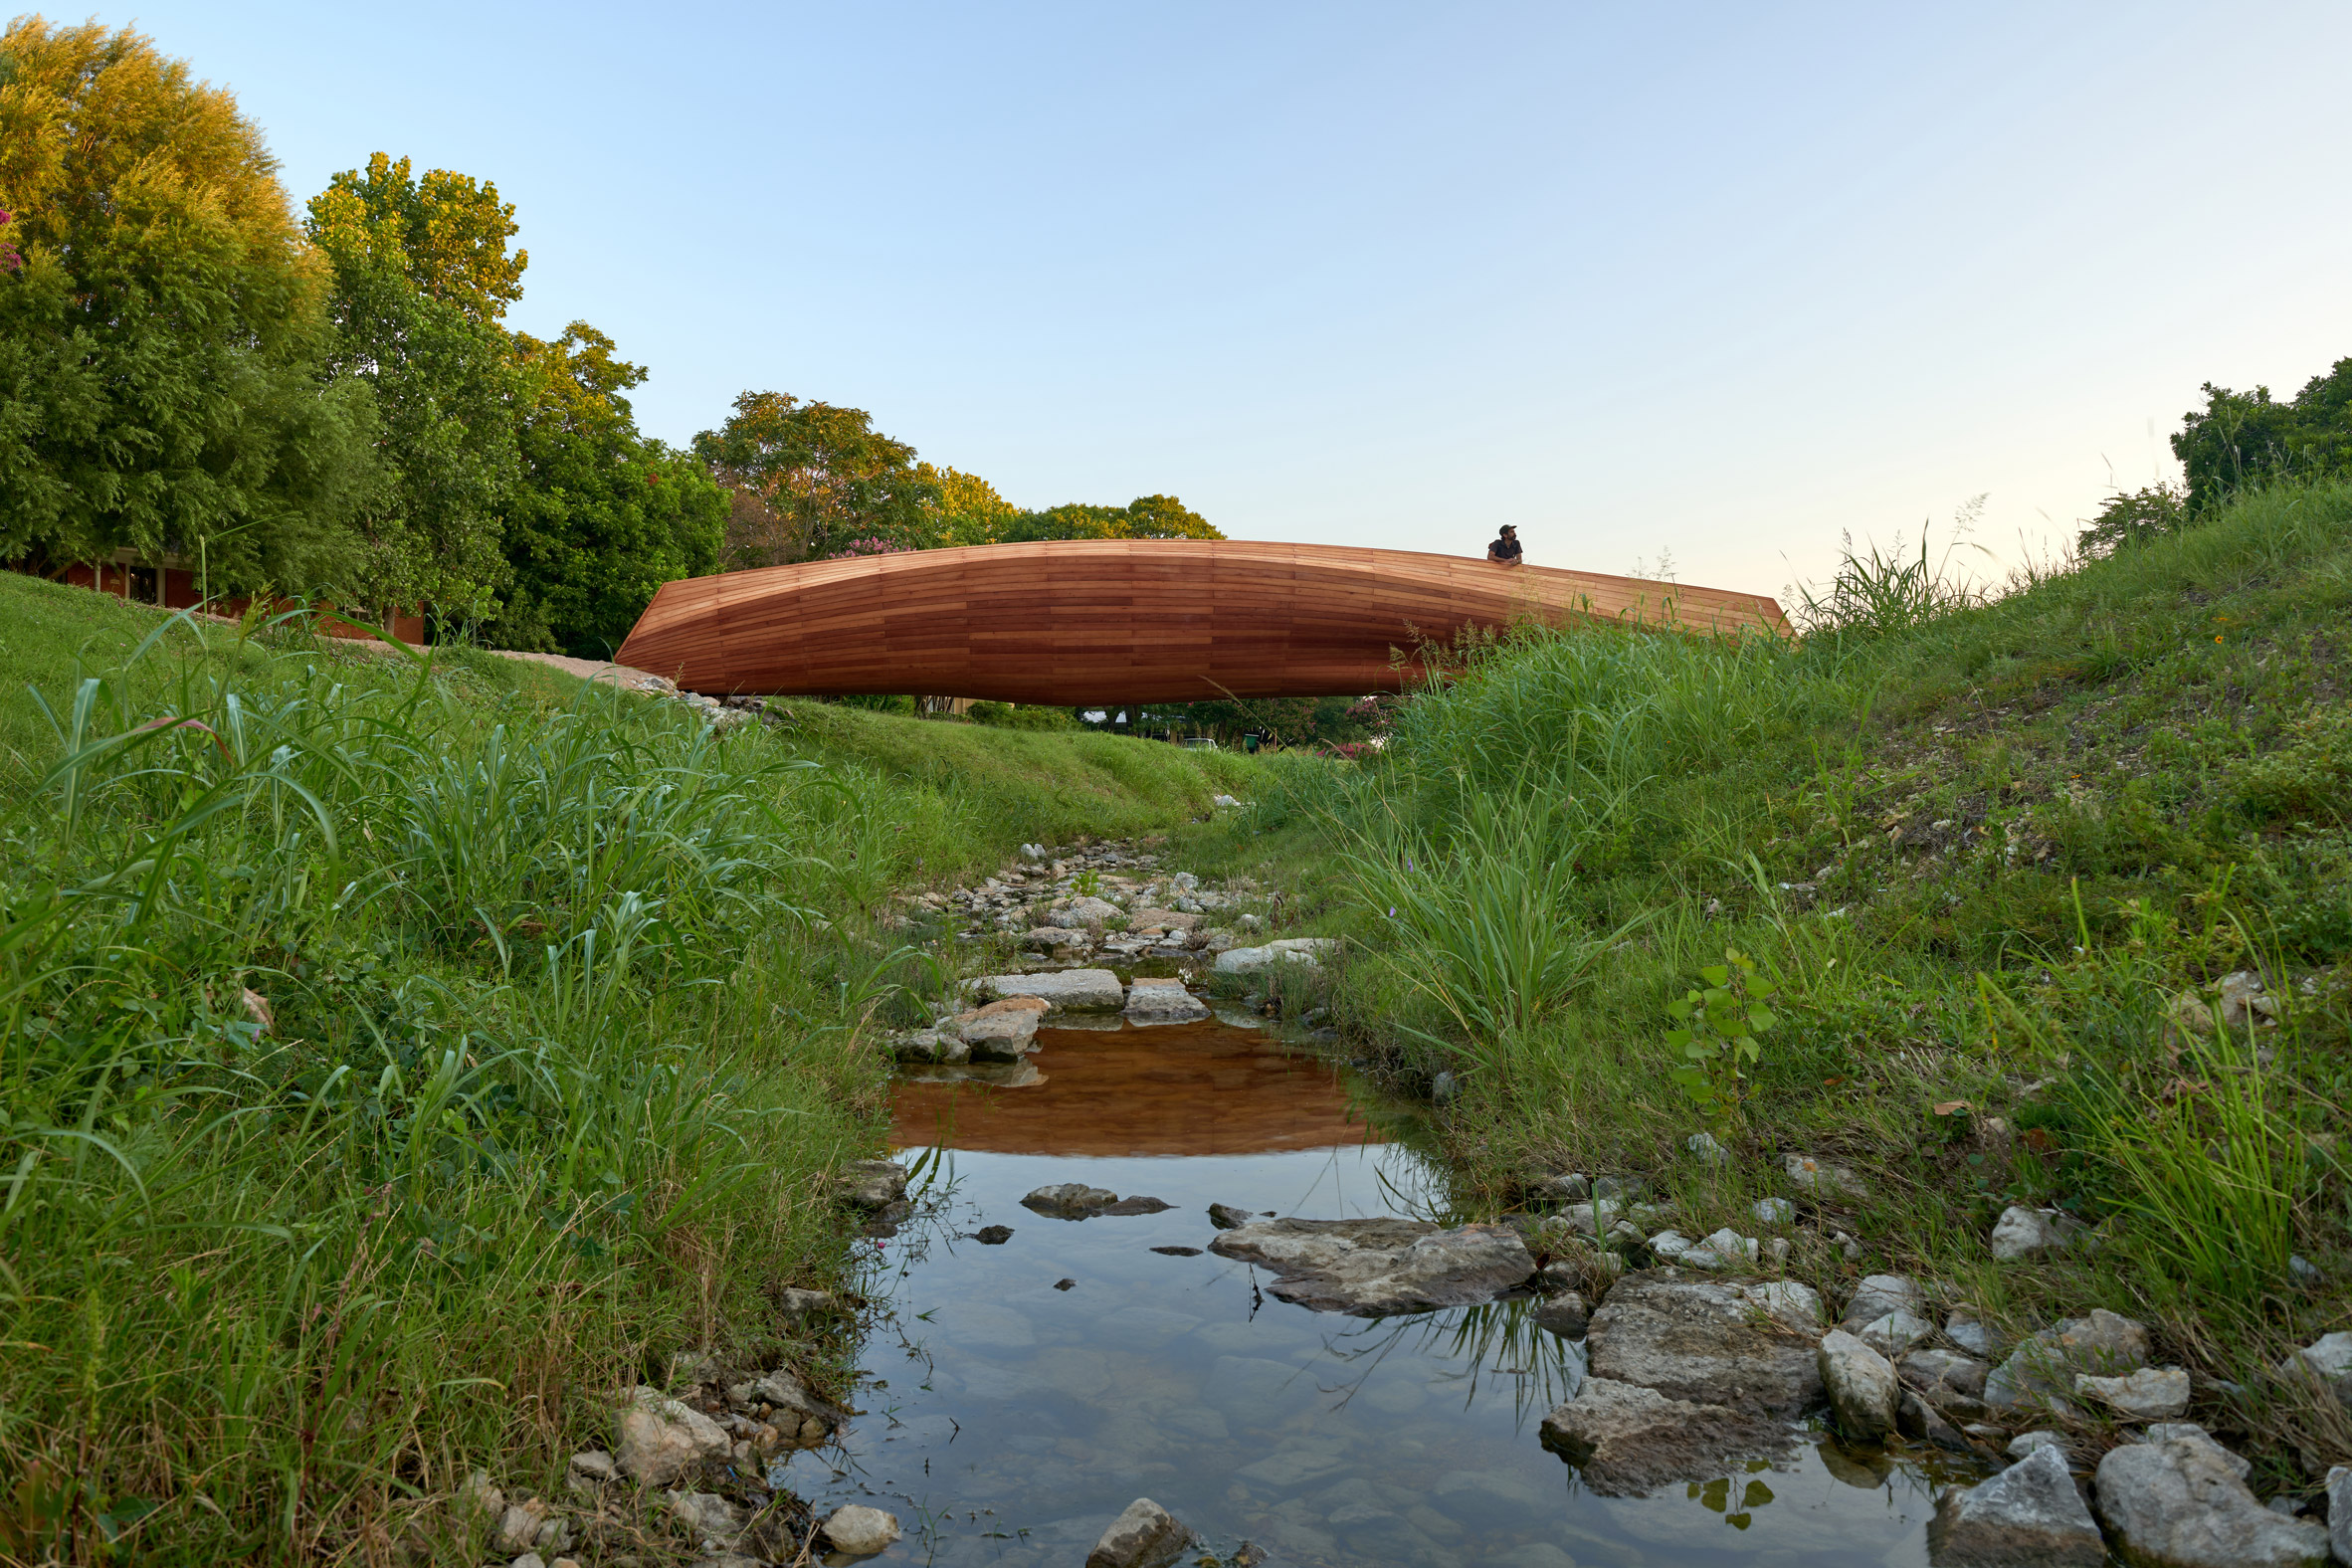 Bridge resembling driftwood